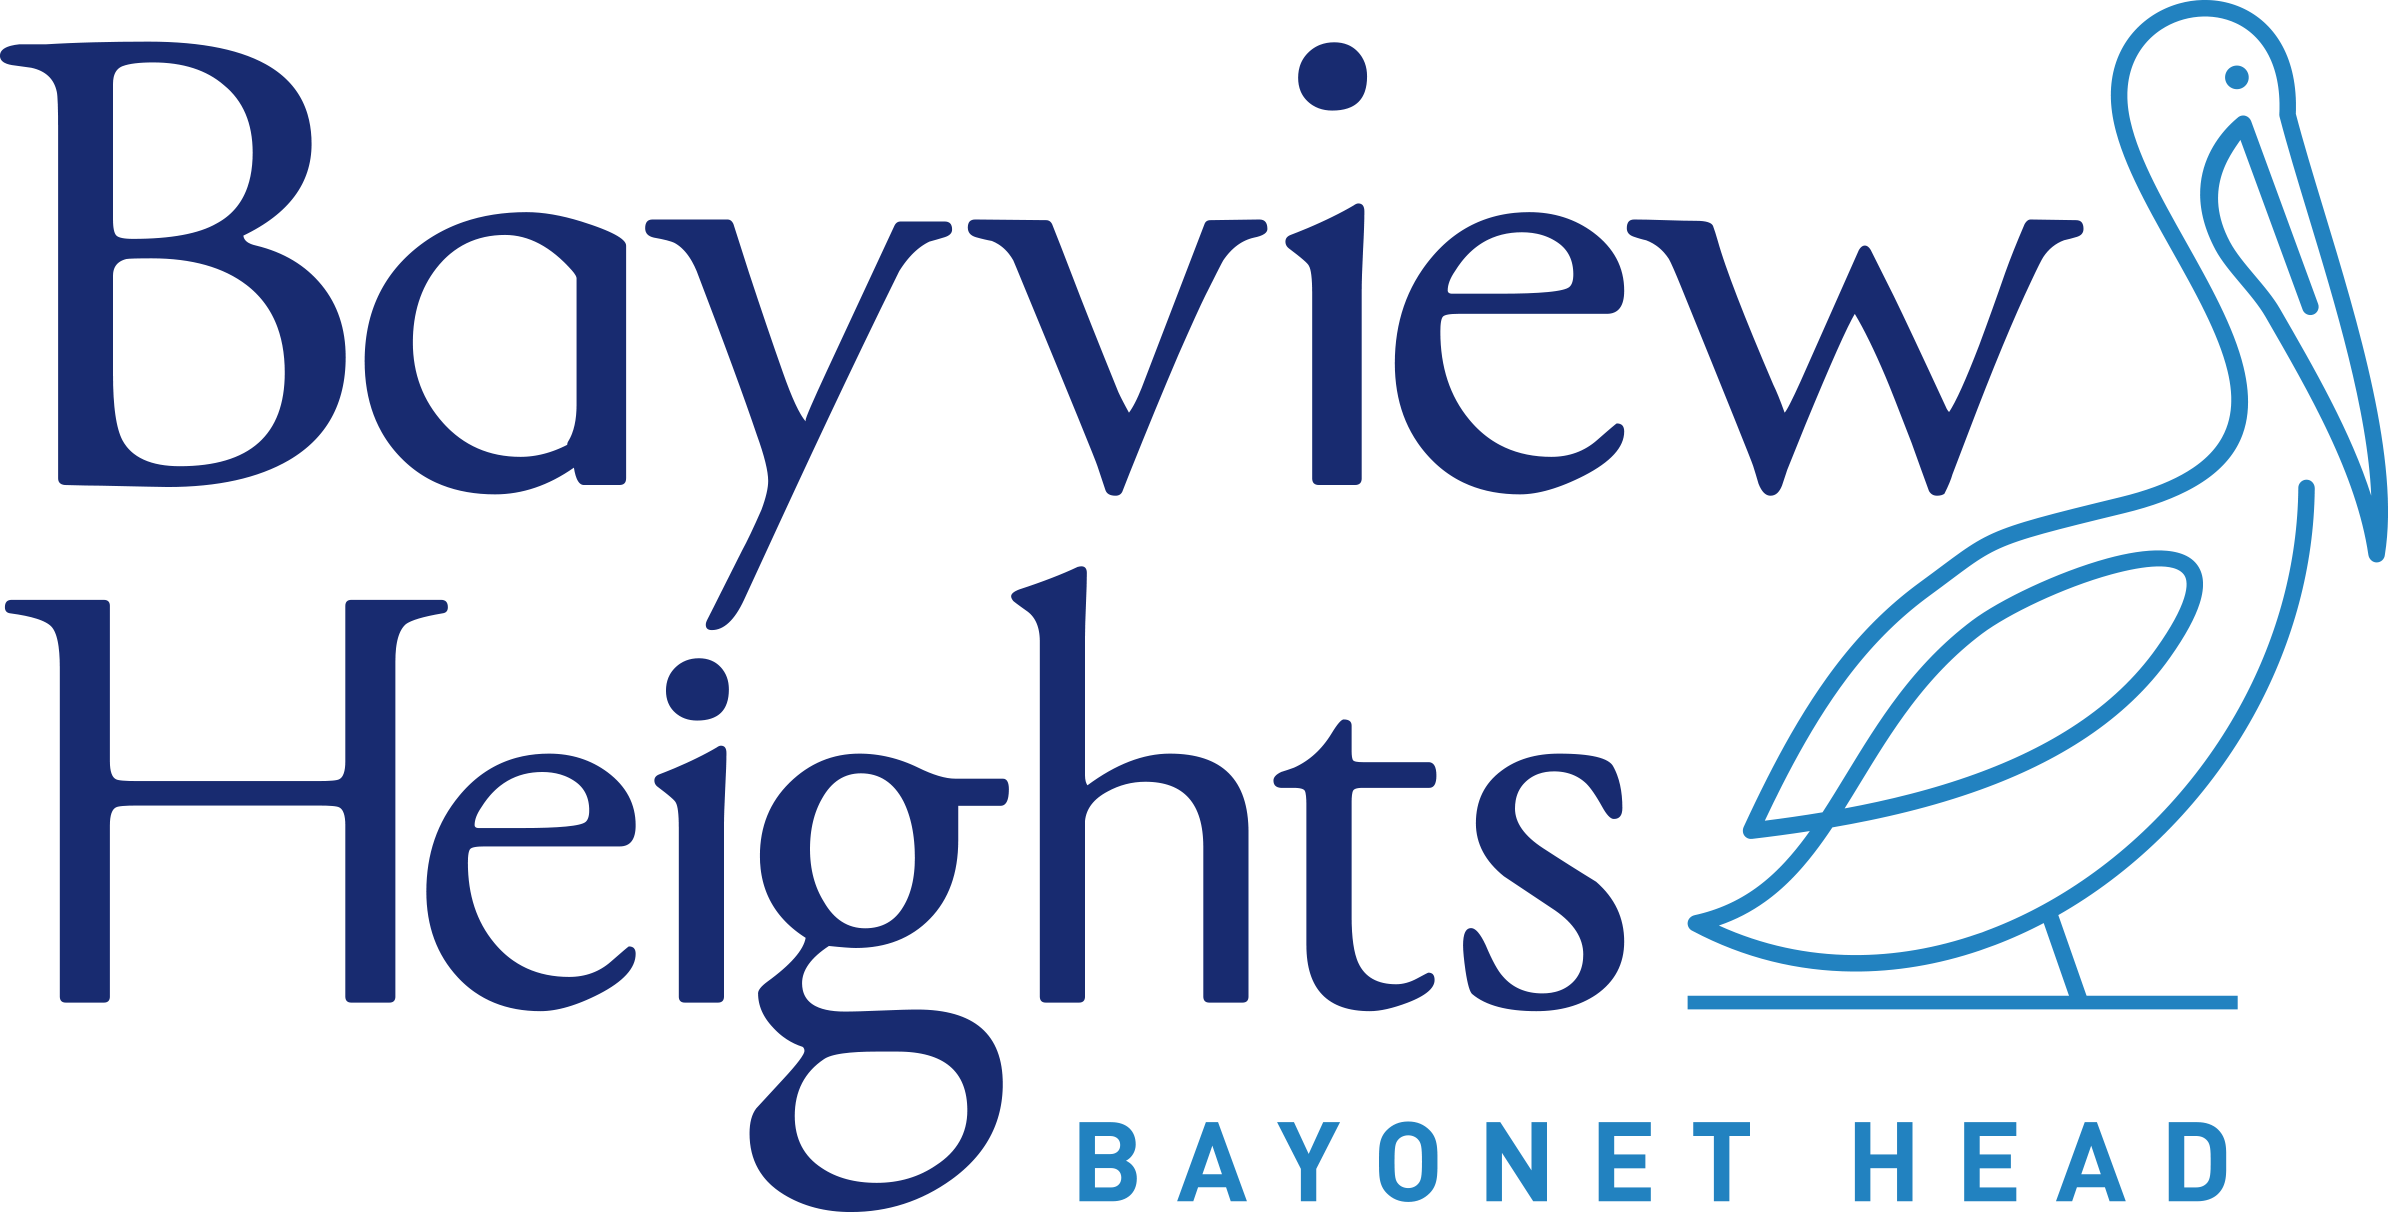 Bayview Heights